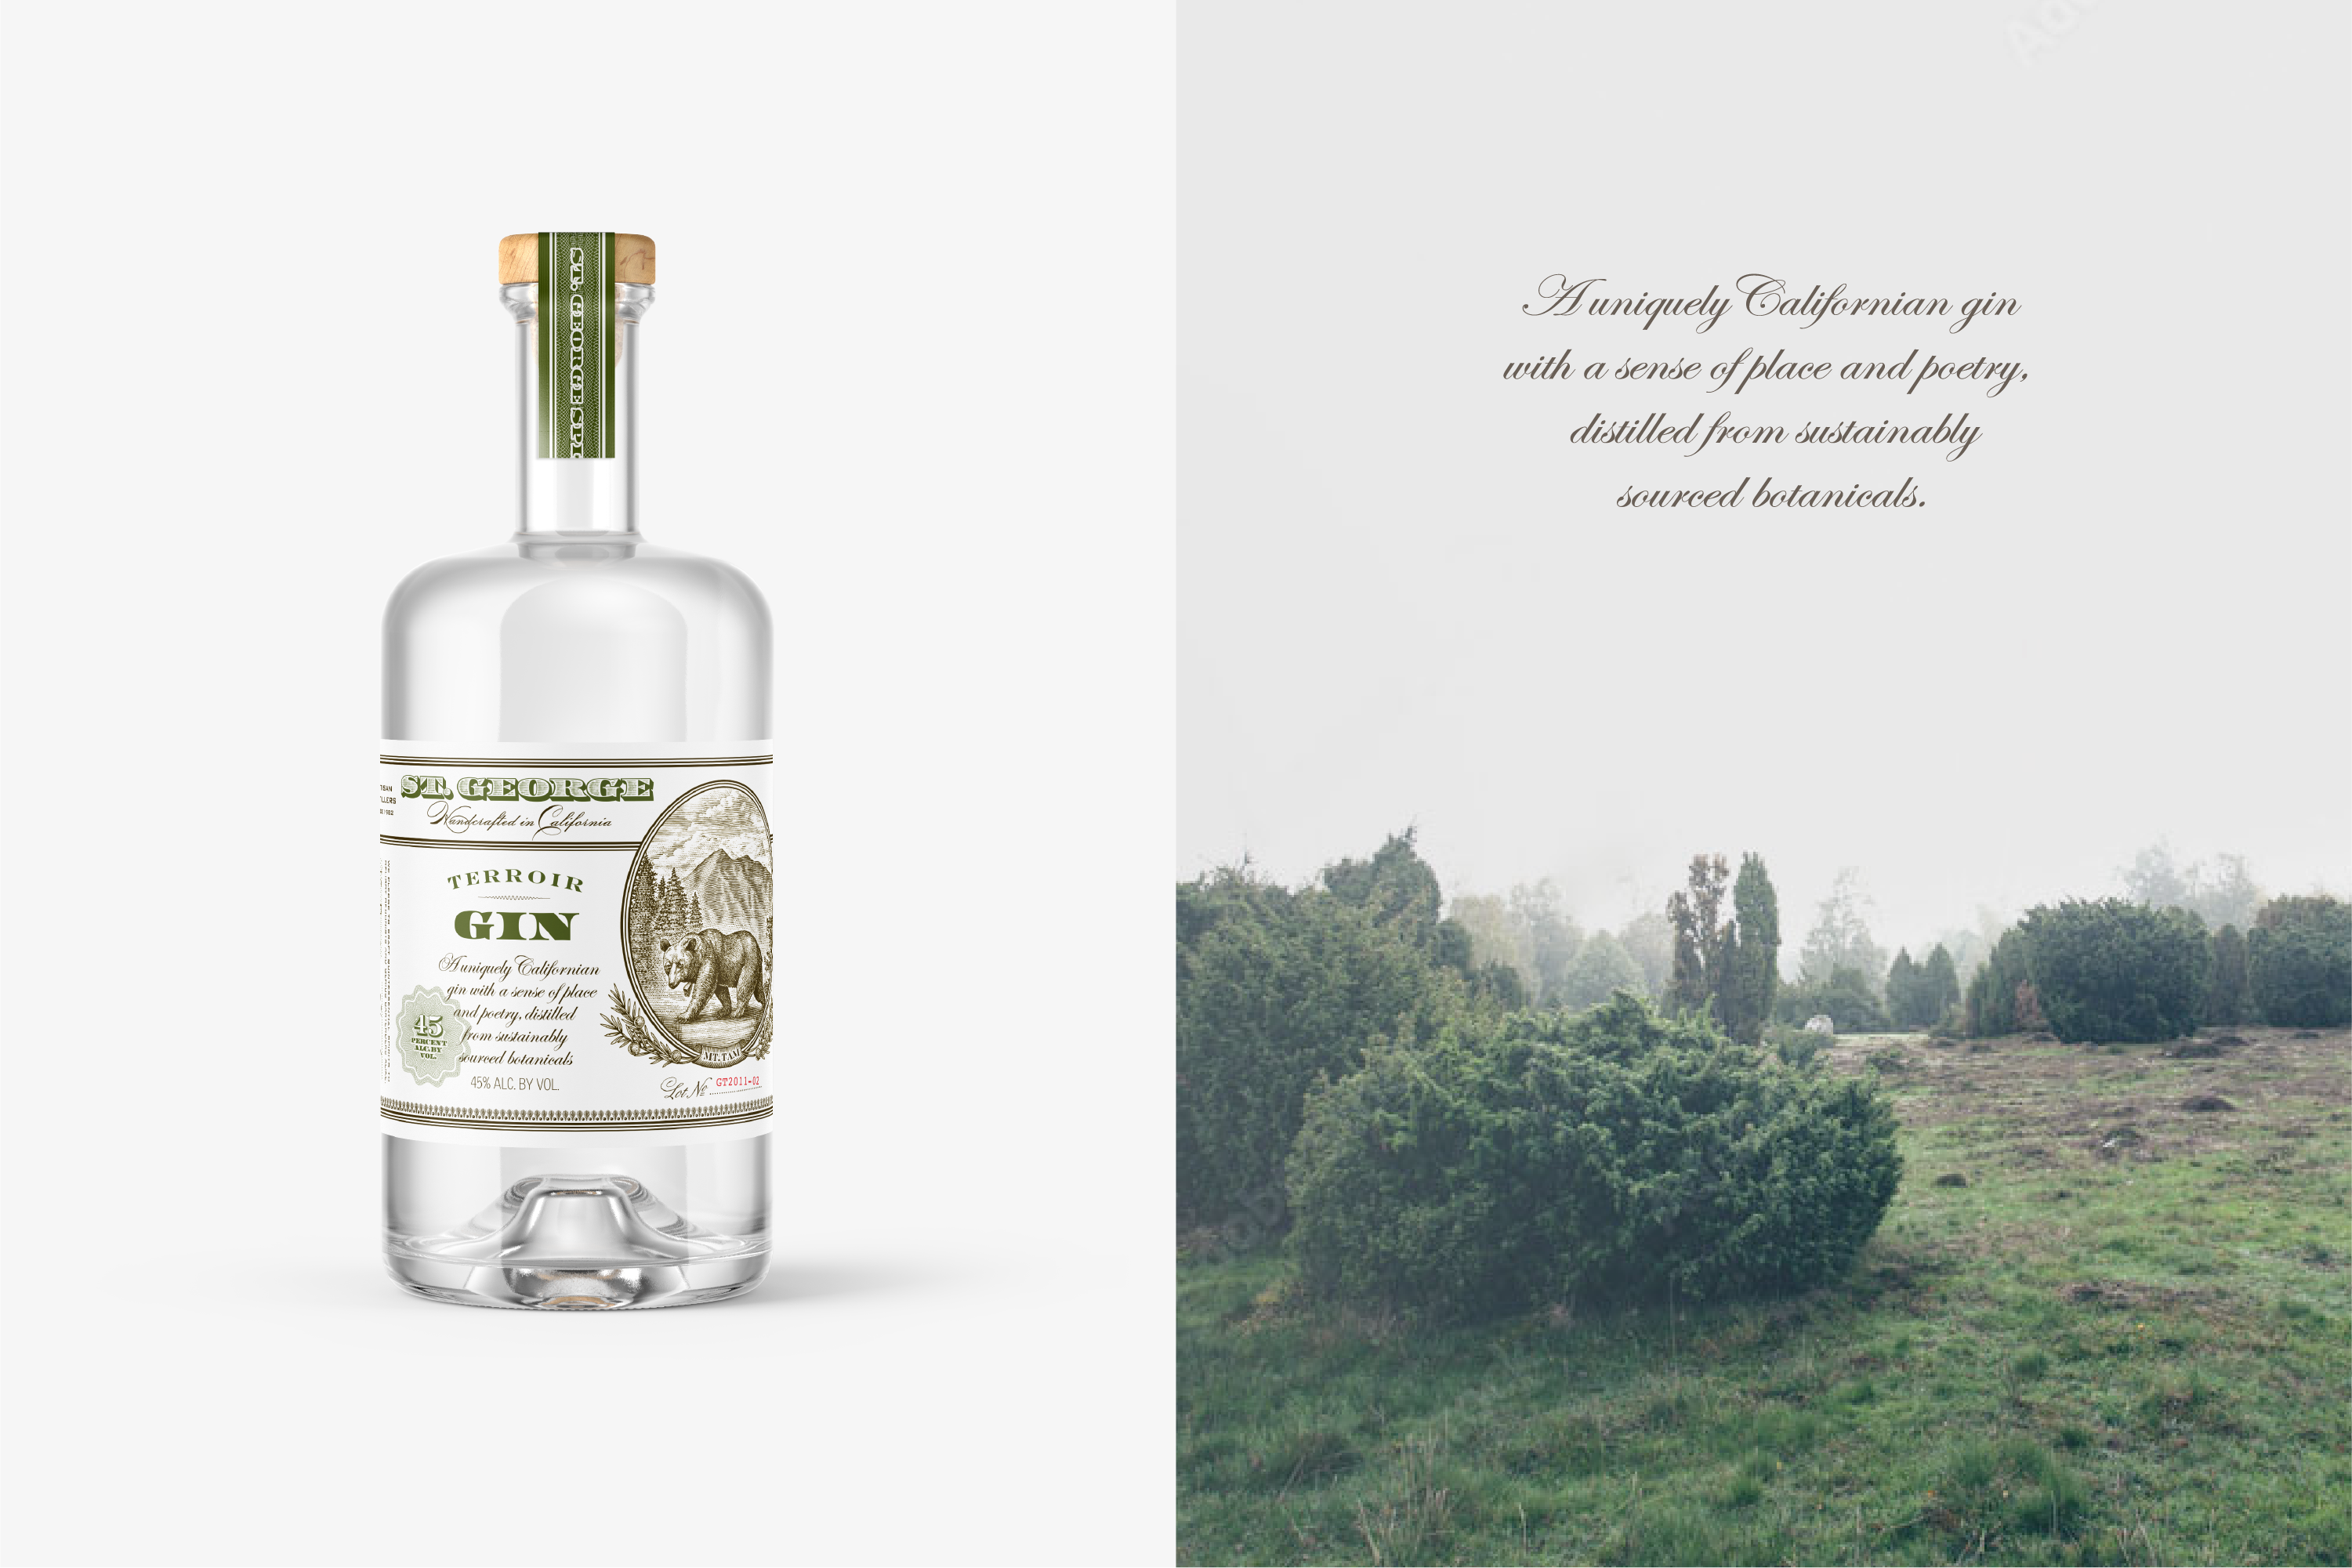 St. George Spirits Terroir Gin distilled from sustainably sourced Juniper botanicals.